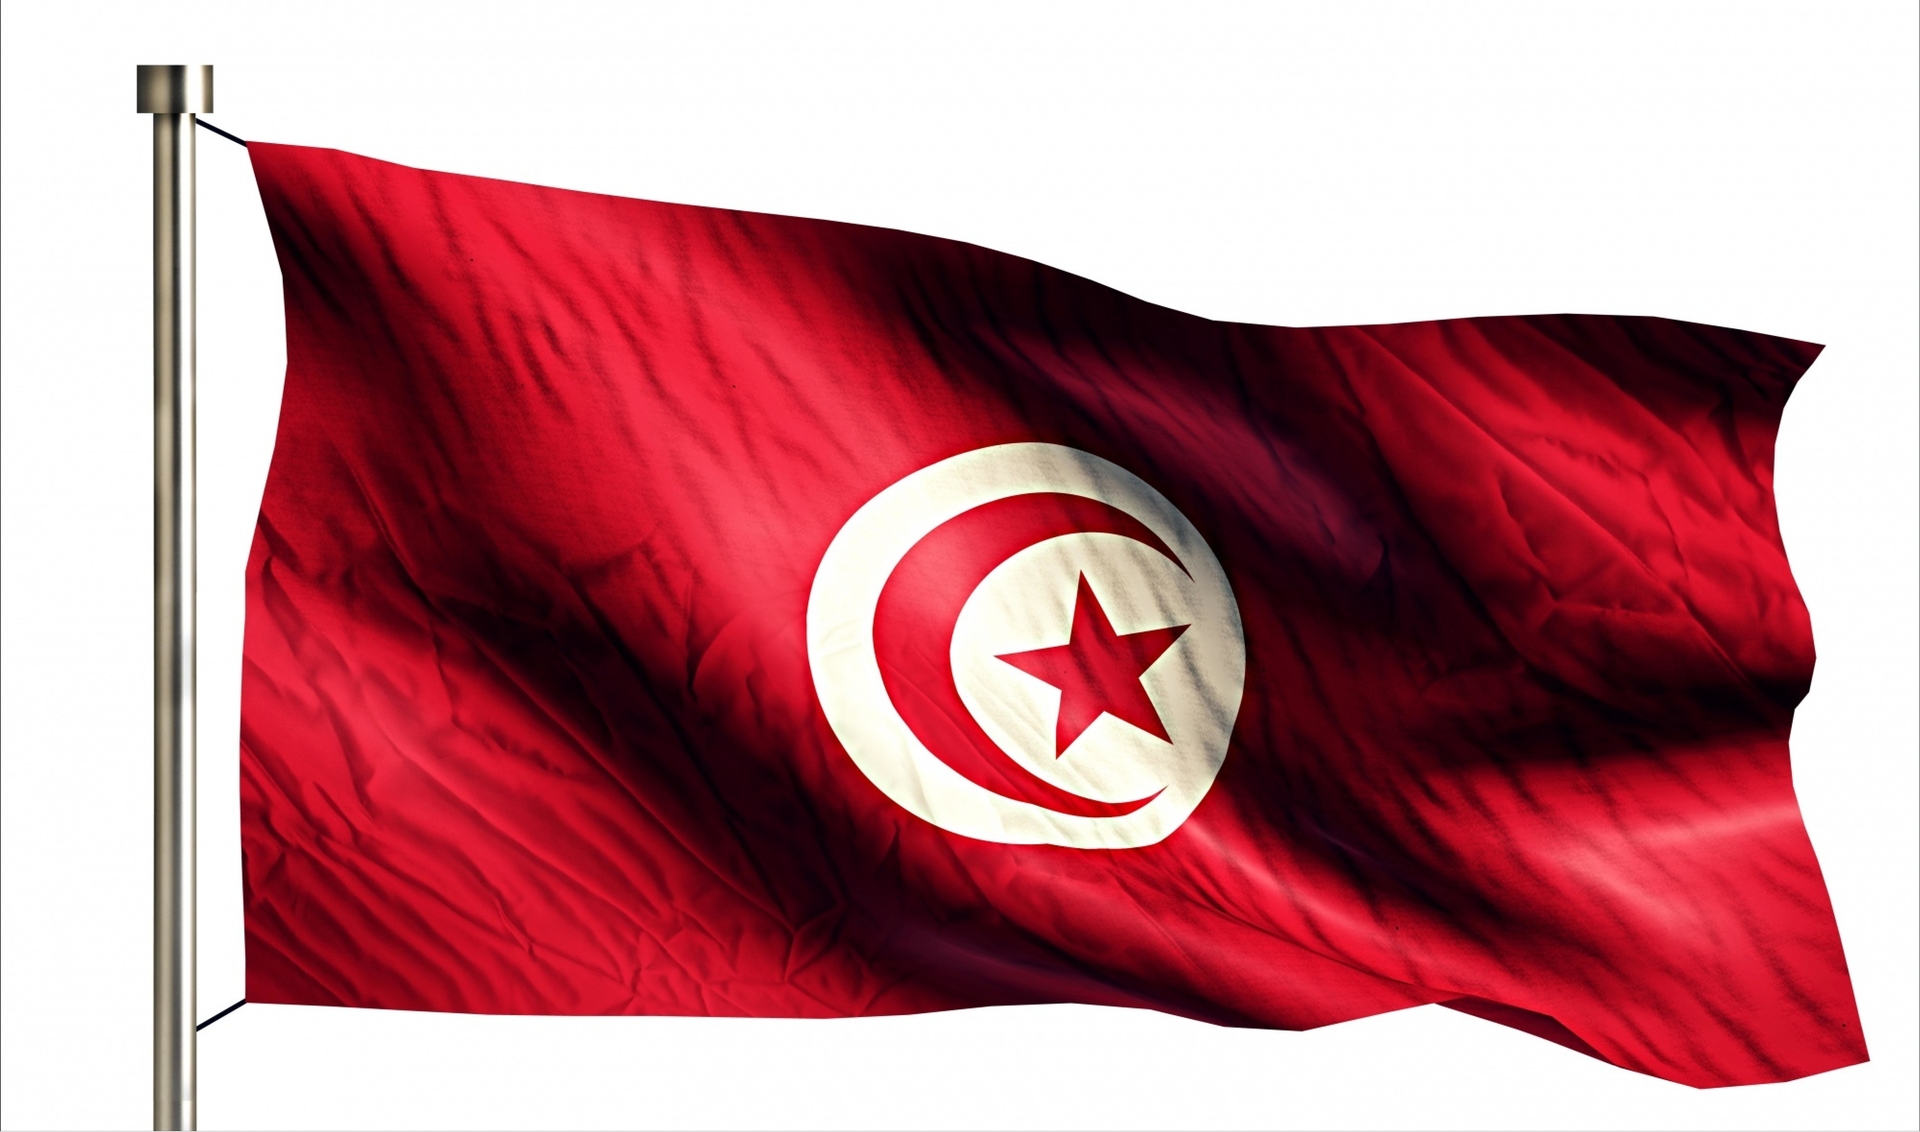 Tunisia: education system